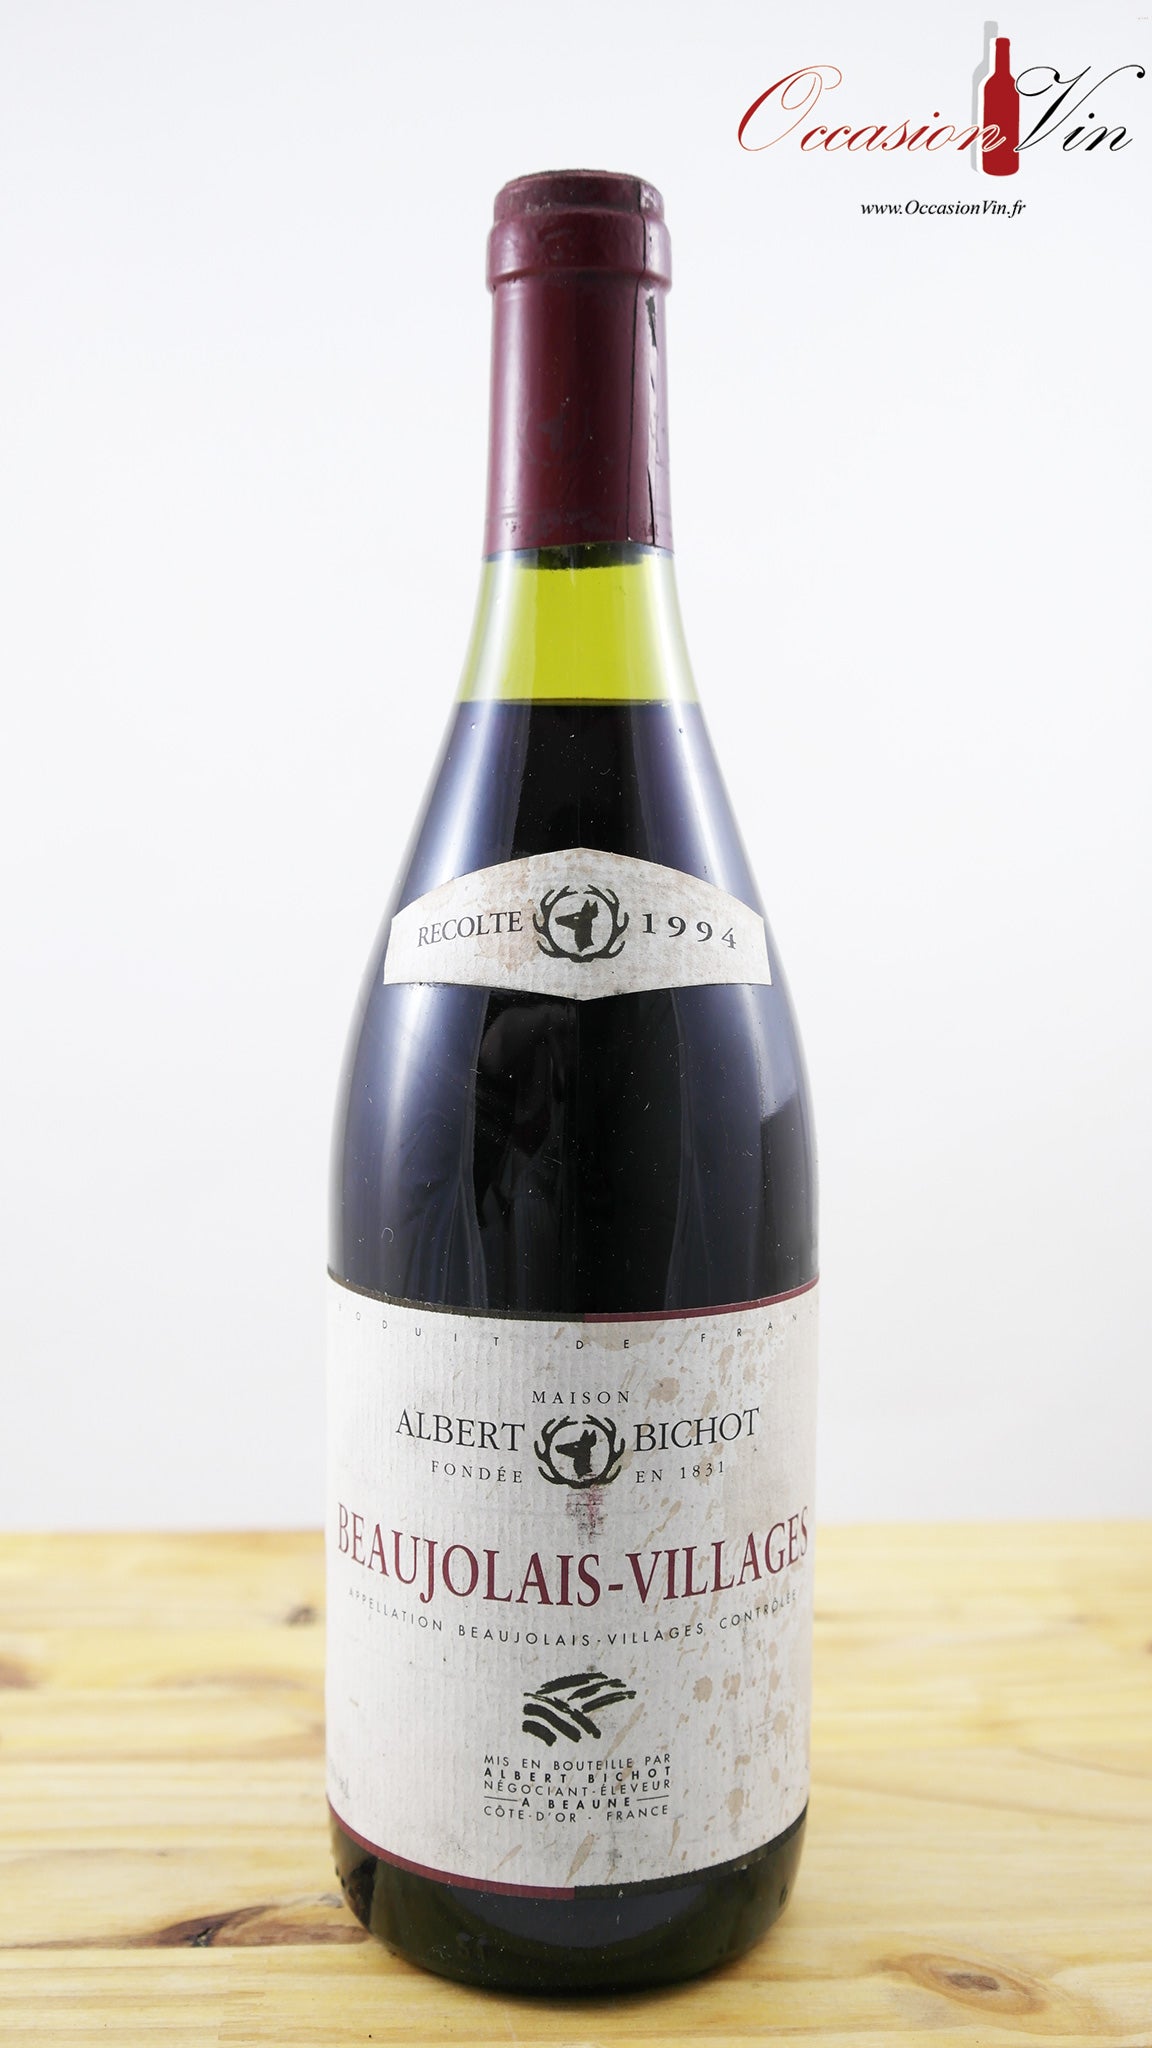 Bichot Beaujolais-Village CA Vin 1994